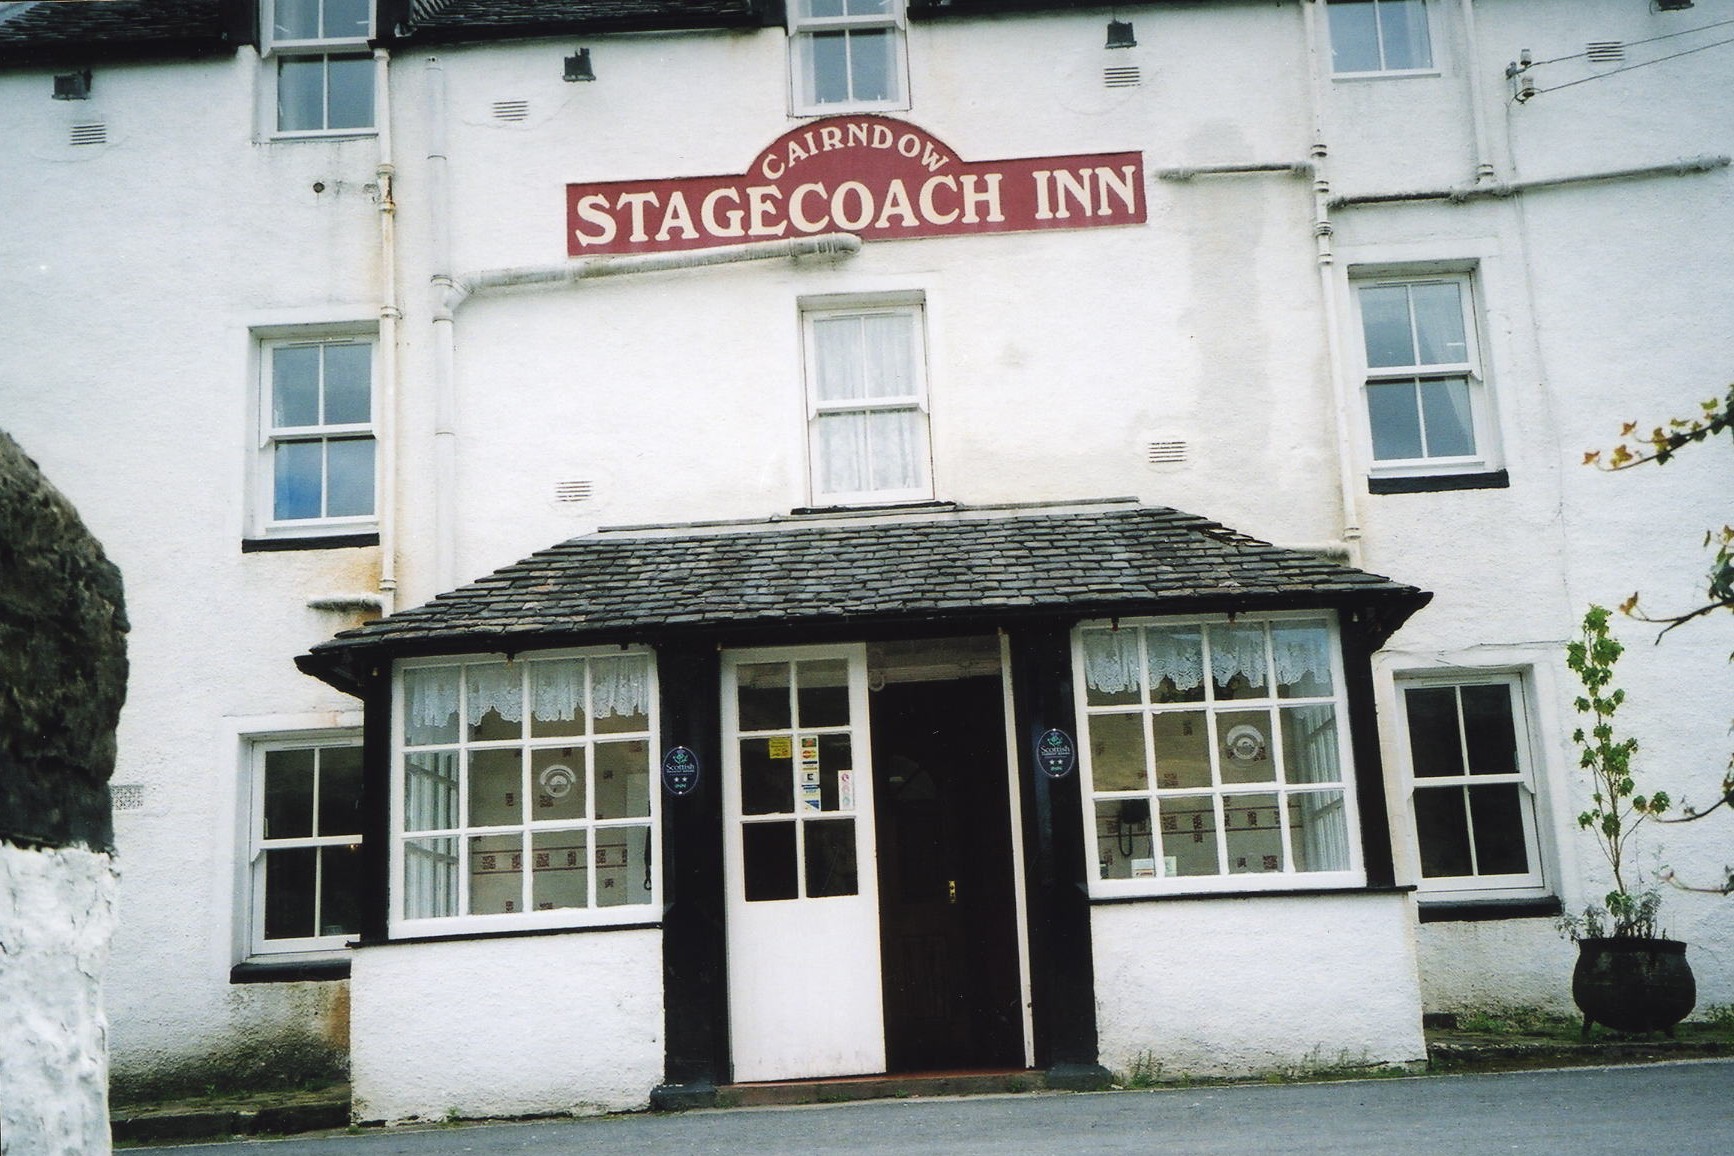 Cairndow Stagecoach Inn